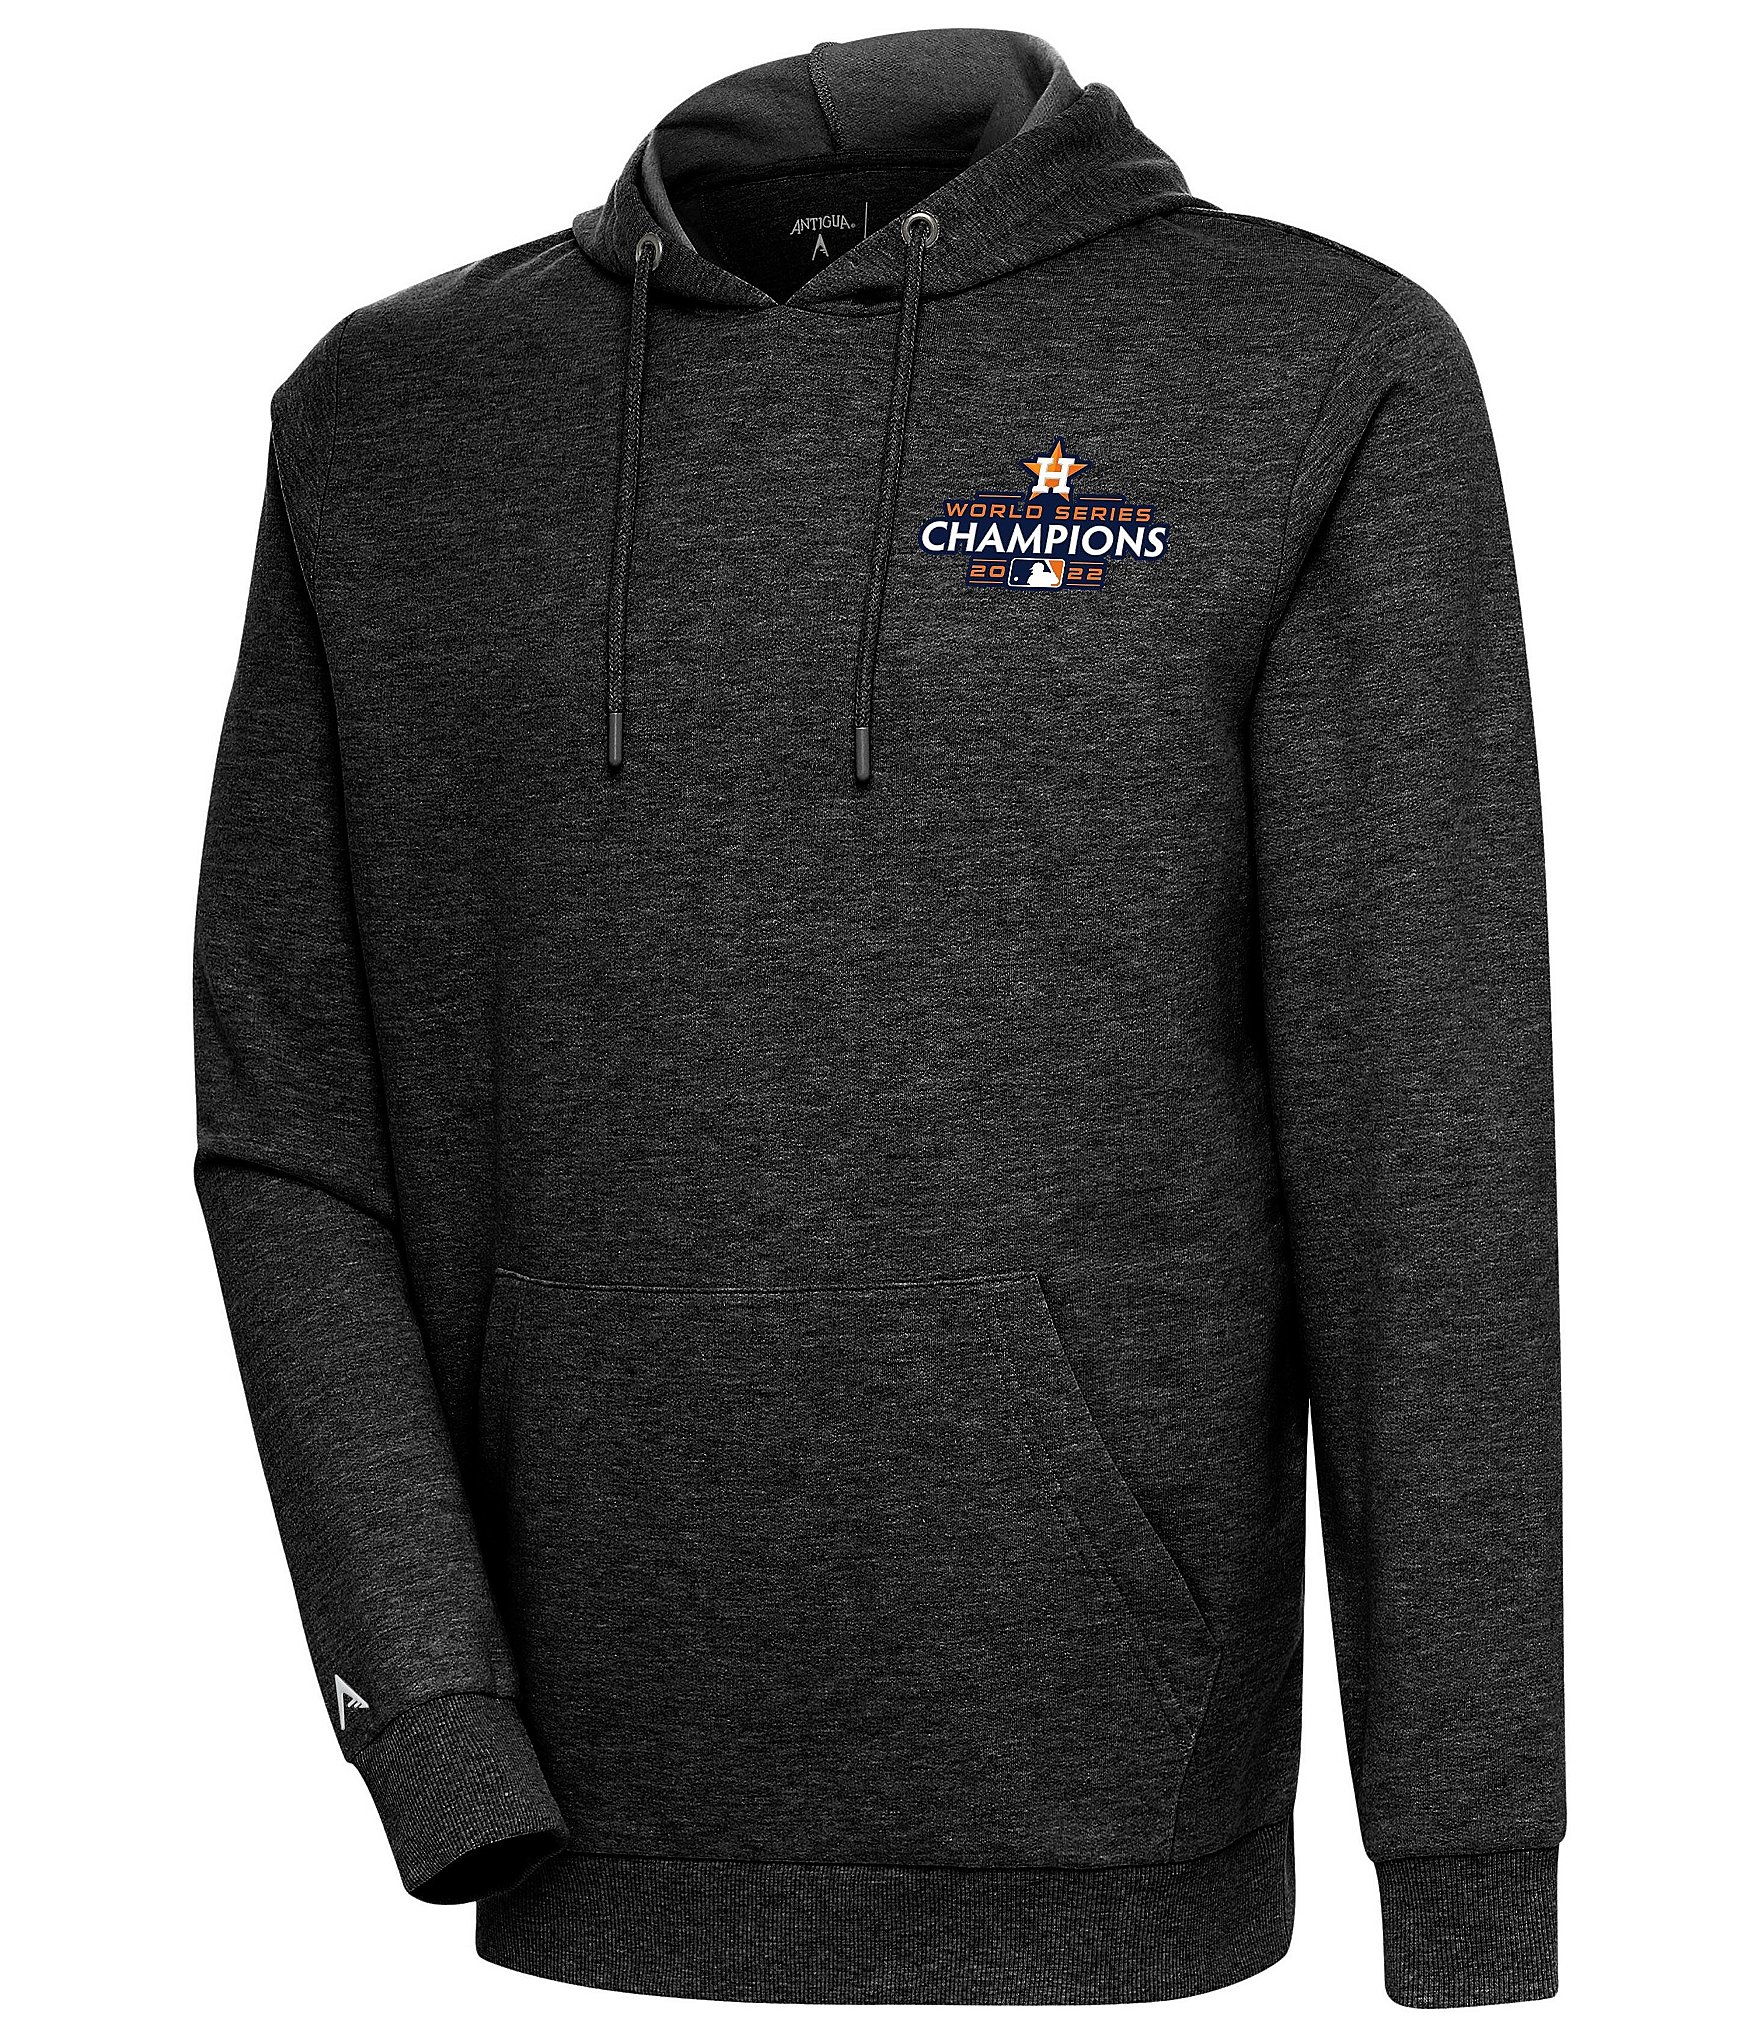 2022 World Series Champions Houston Astros shirt, hoodie, sweater